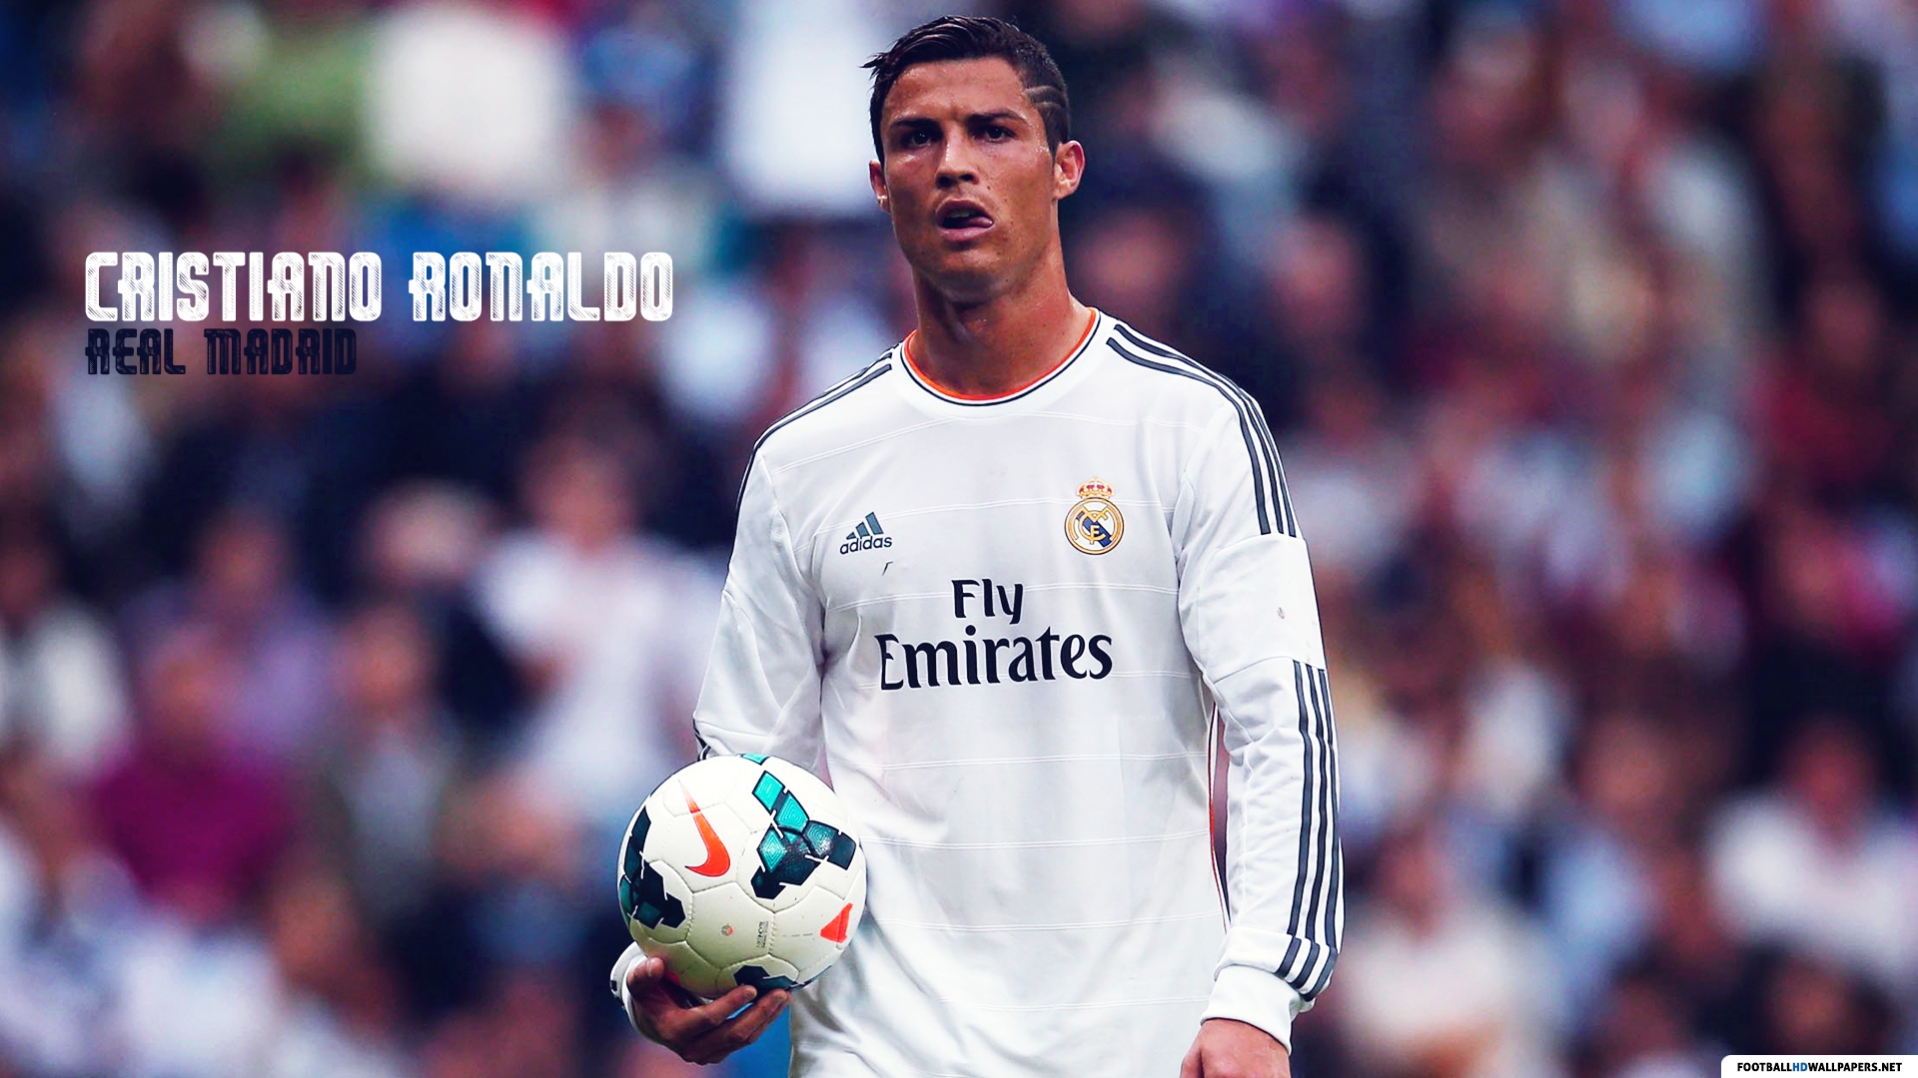 Of Cristiano Ronaldo Real Madrid Wallpaper Full HD